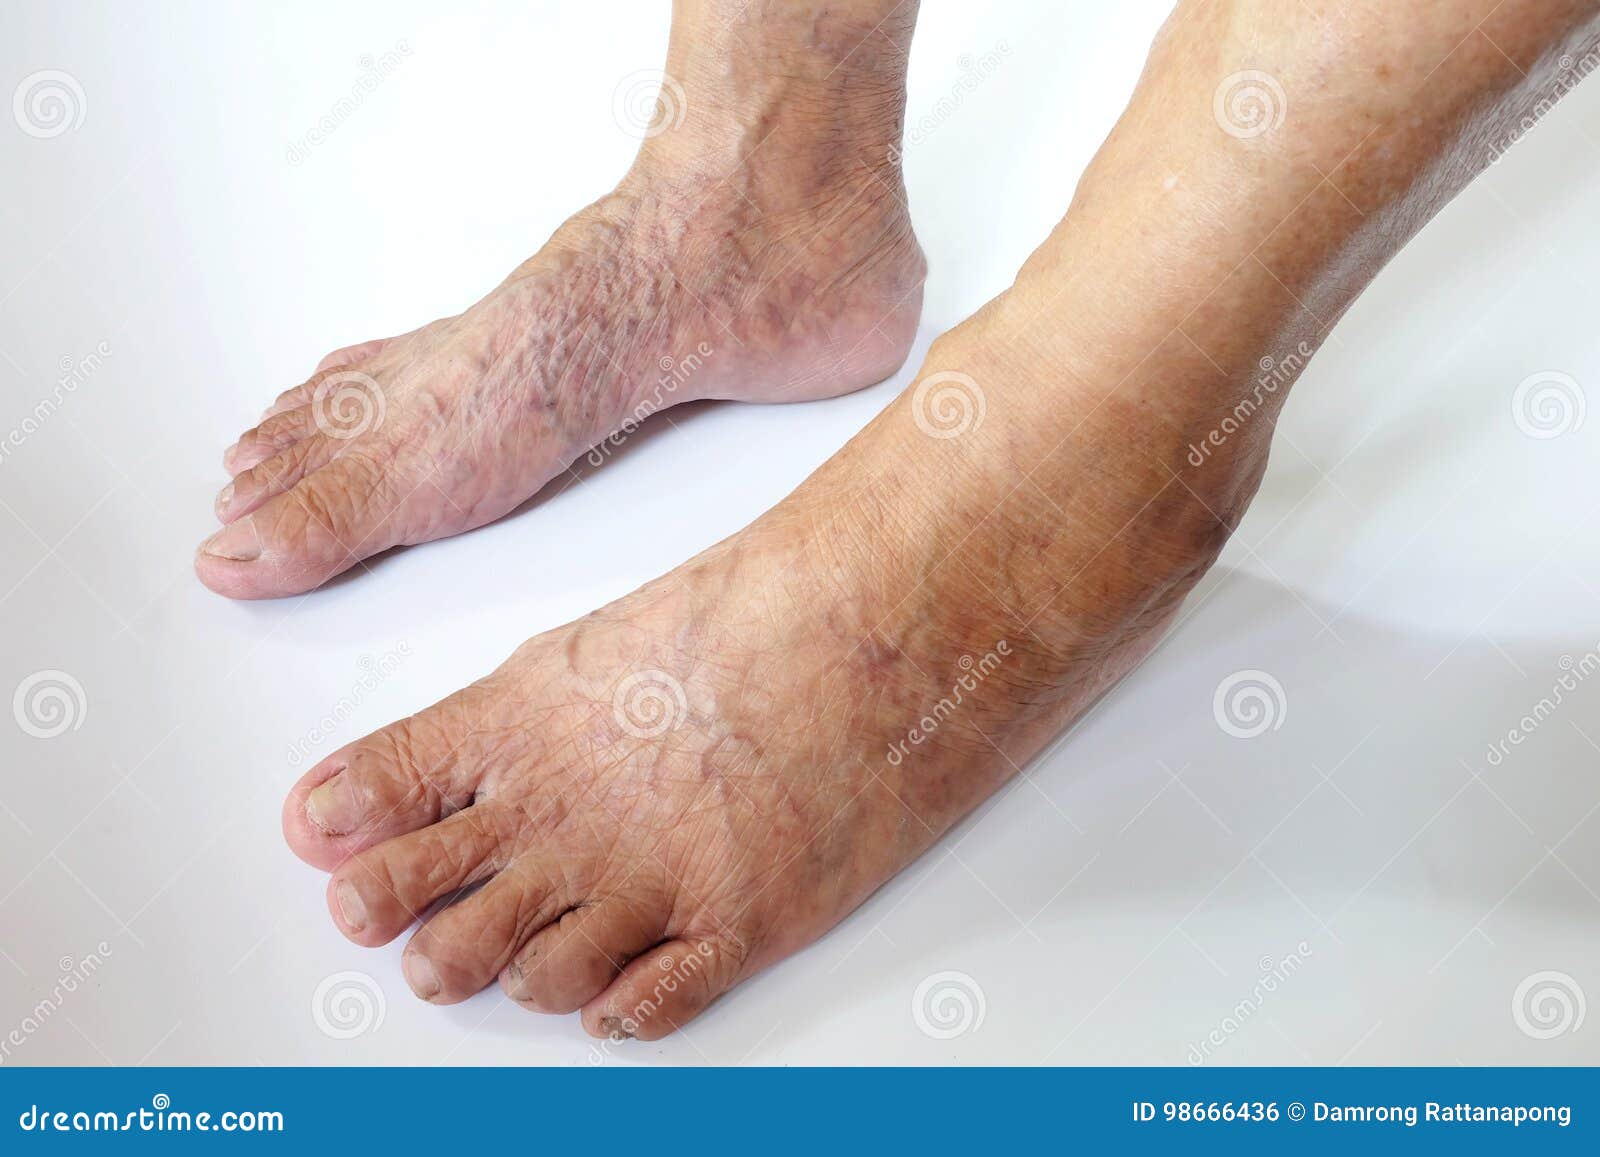 vene varicose piedi